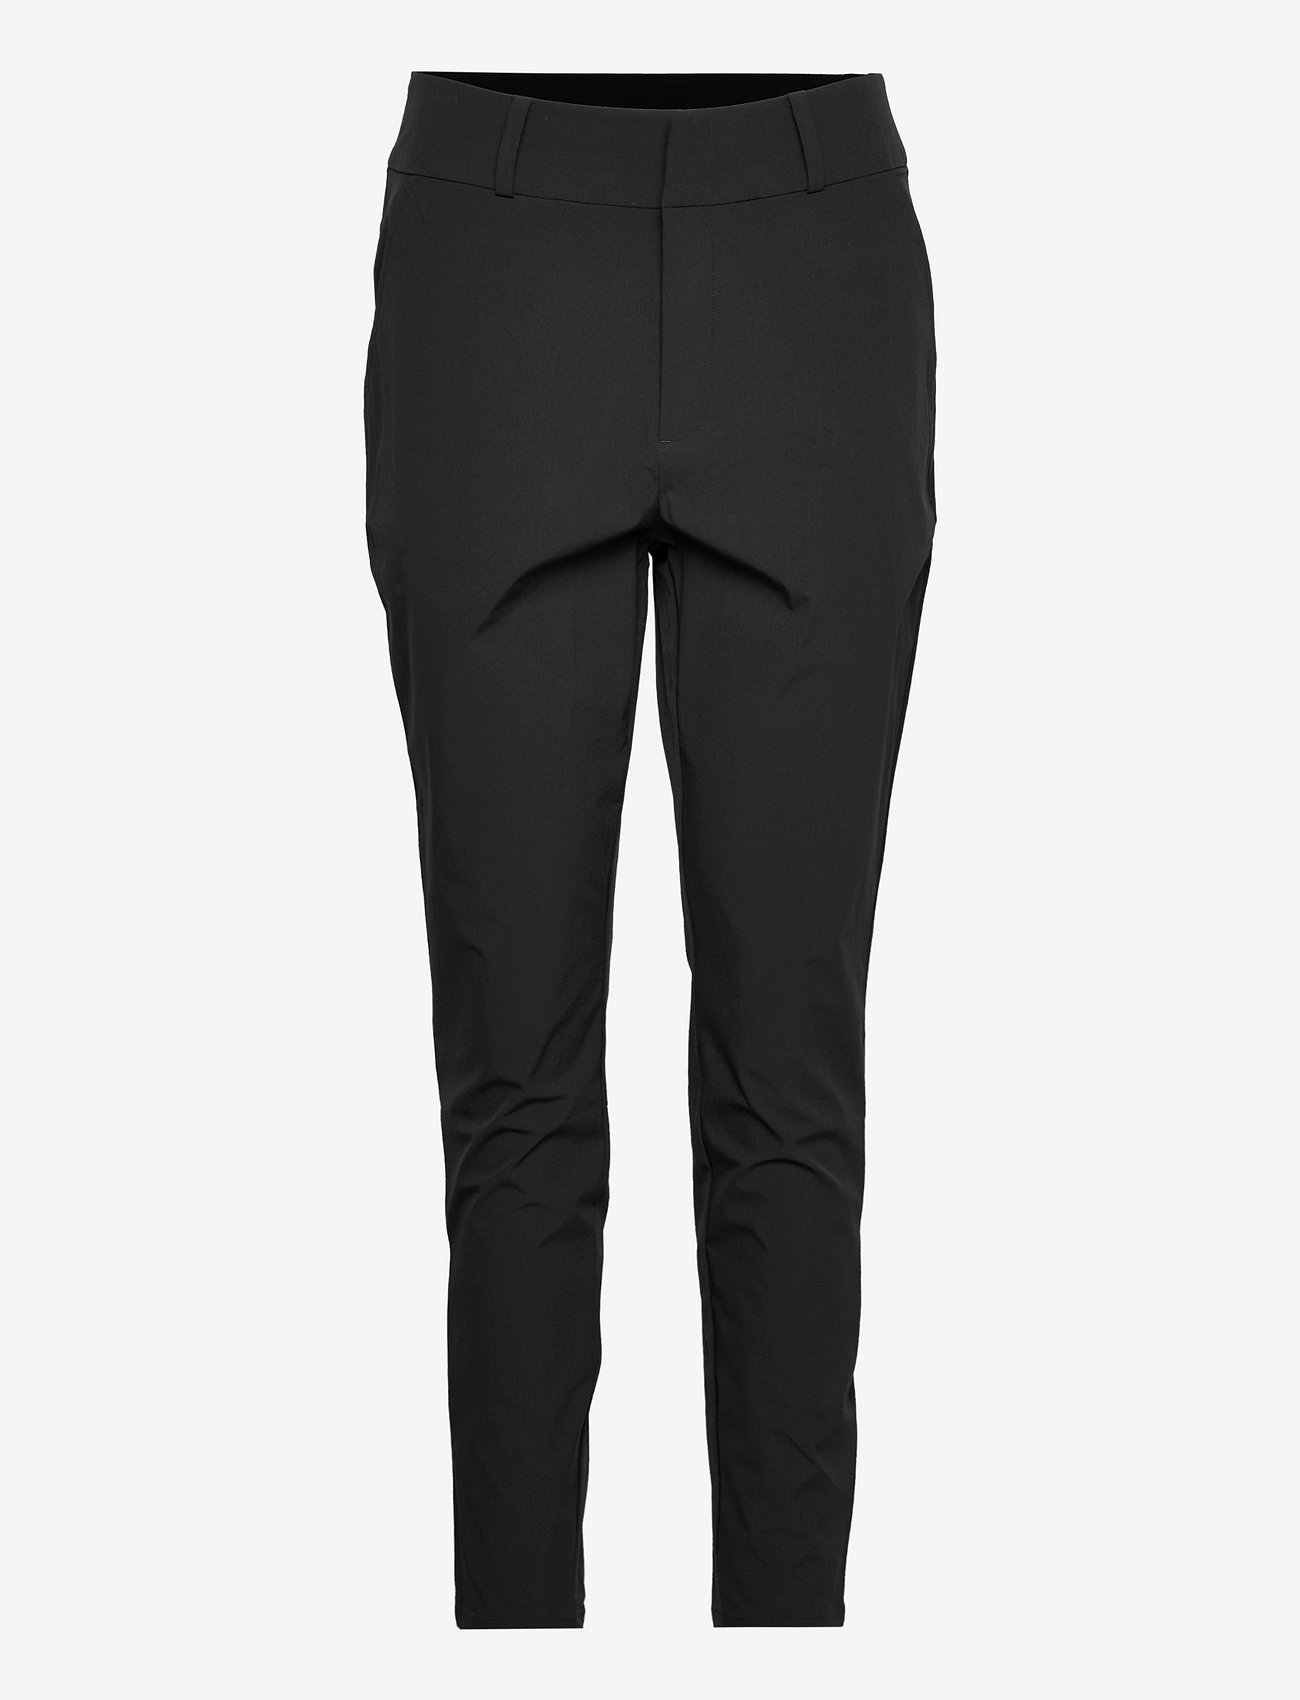 AIM'N - Black Tech Pants - golf pants - black - 1